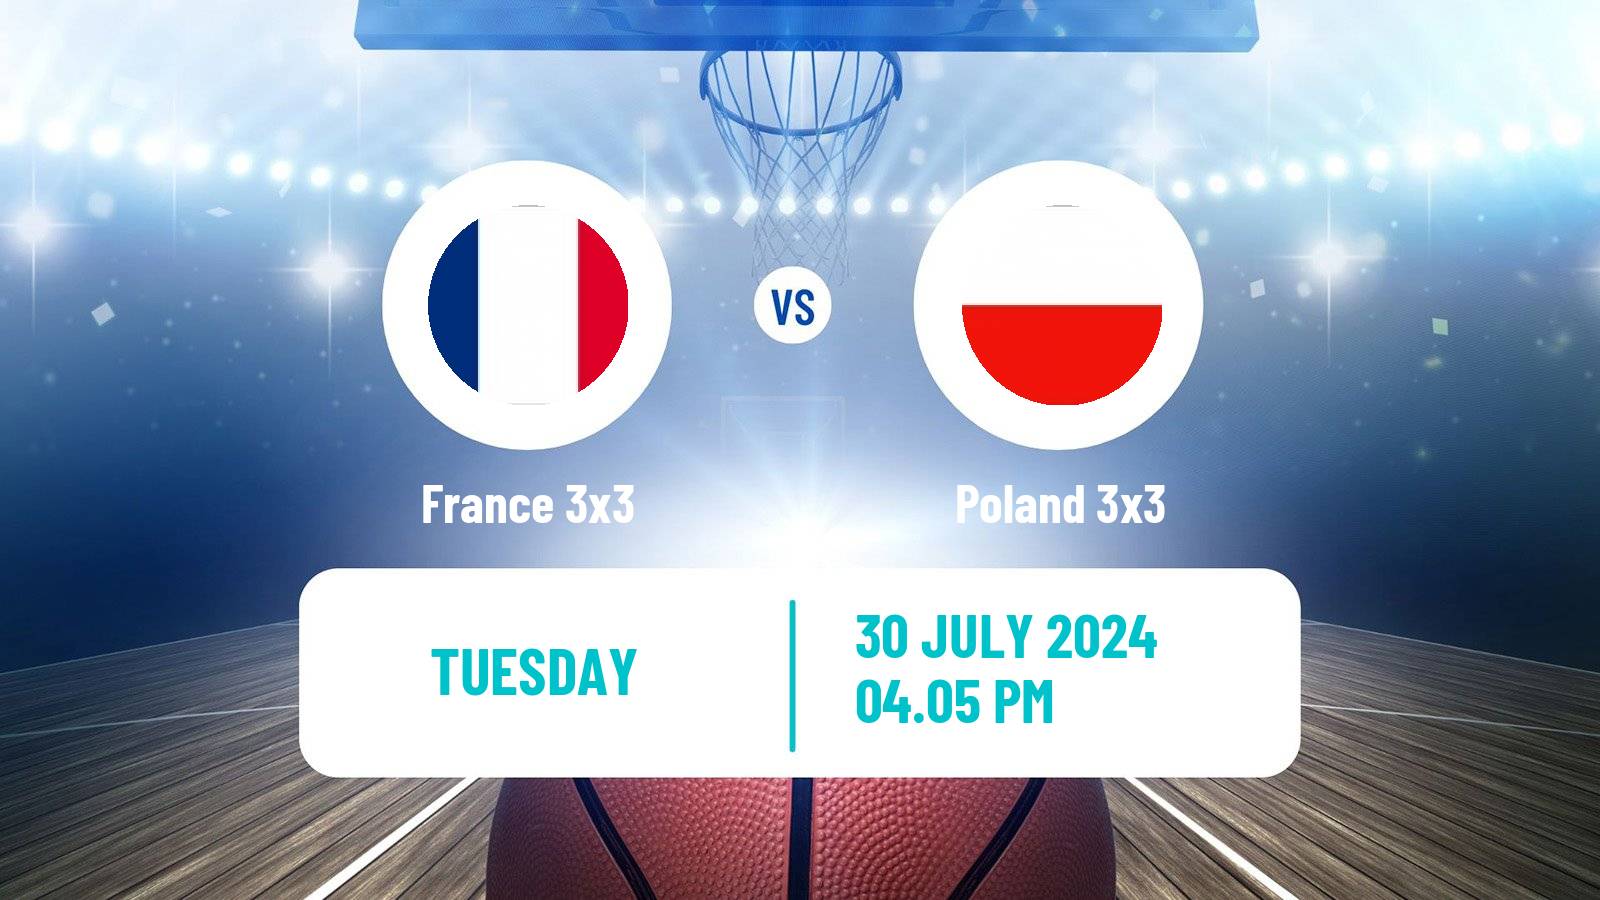 Basketball Olympic Games Basketball 3x3 France 3x3 - Poland 3x3